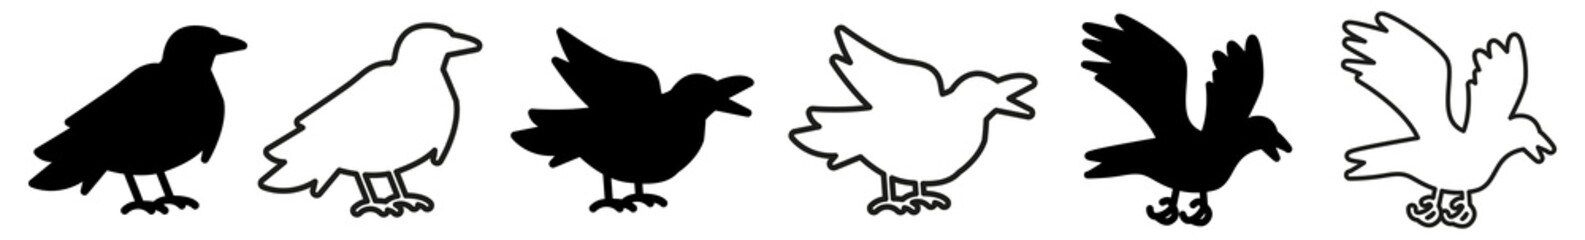 Crow Icon Black | Bird Illustration | Dark Raven Symbol | Halloween Logo | Flight Sign | Isolated | Variations